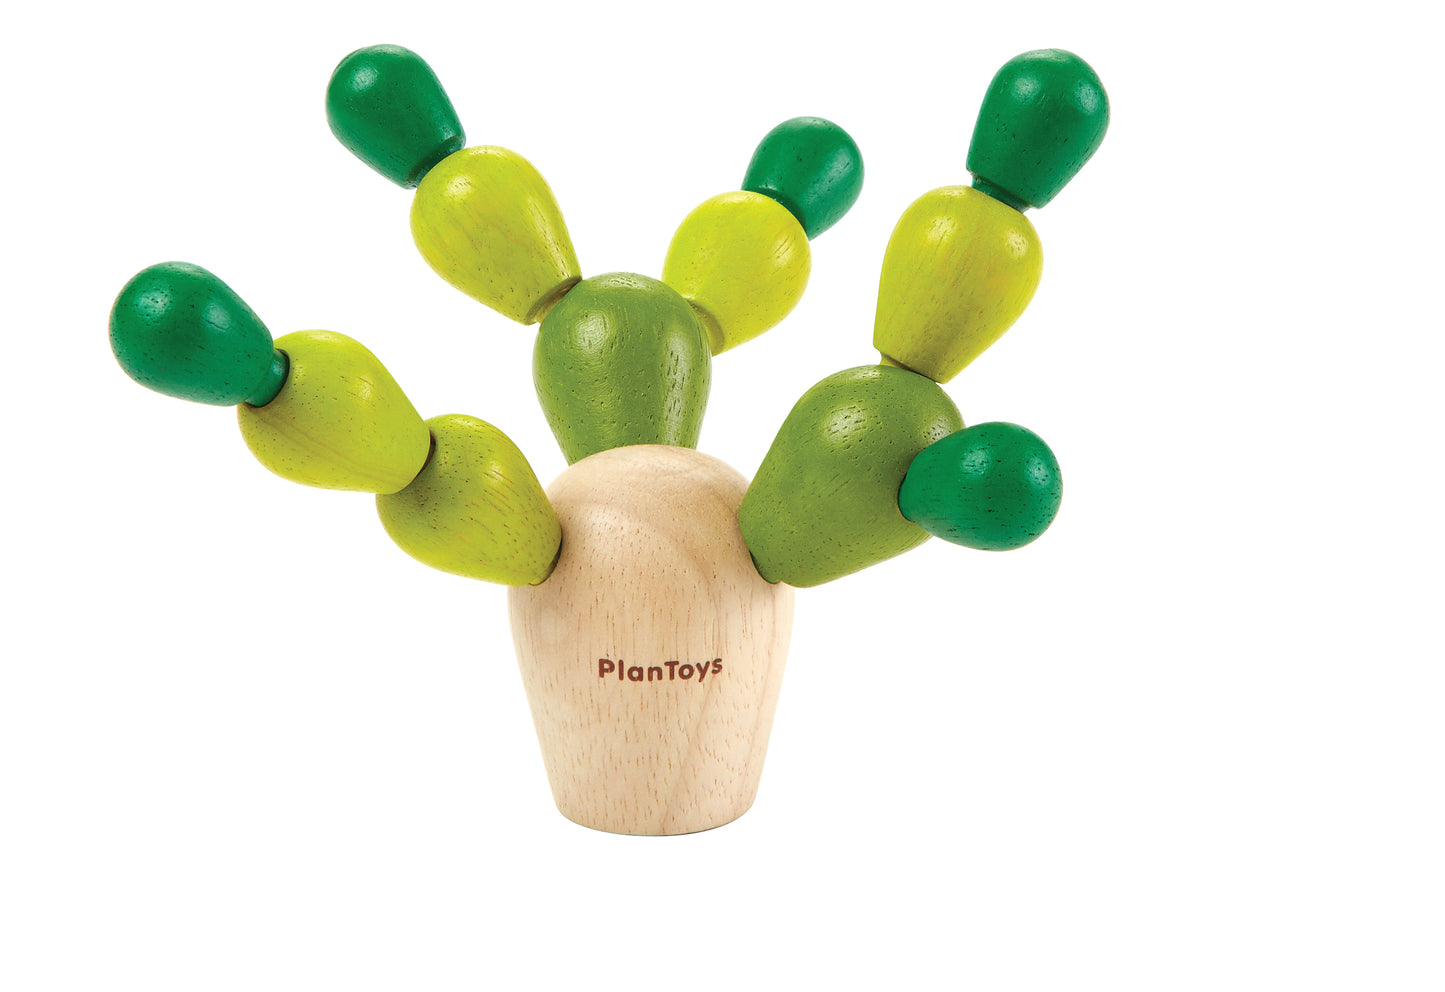 Wooden Balancing Cactus Toy